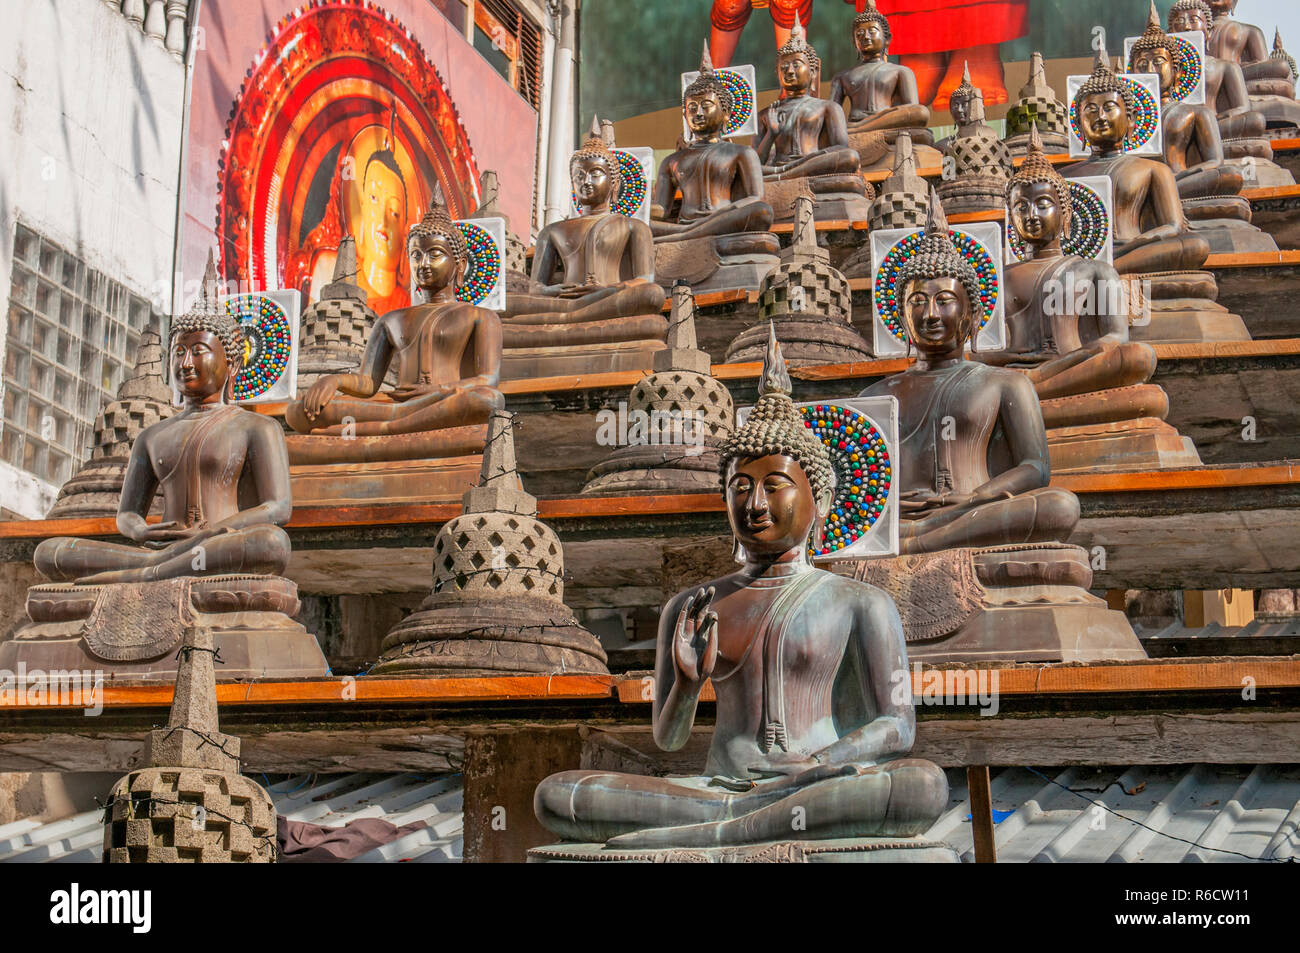 Statues Of The Buddha In The Lotus Position, Gangaramaya Buddhist Temple, Colombo, Sri Lanka Stock Photo